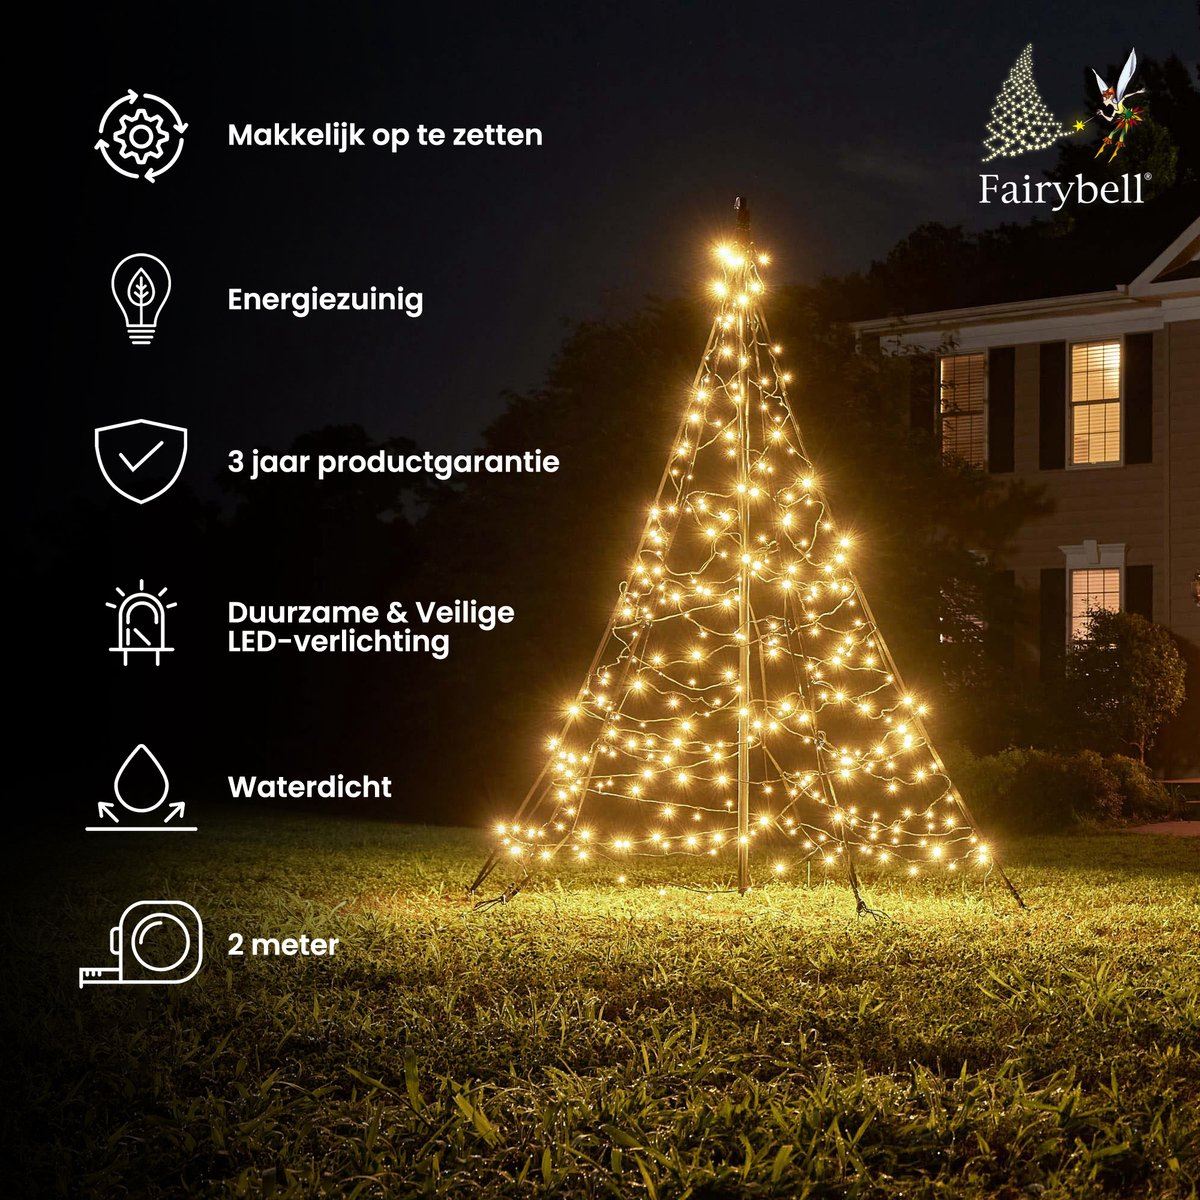 Fairybell vlaggenmast kerstboom - 200 cm - 300 warm witte ledlampjes - inclusief vlaggenmast